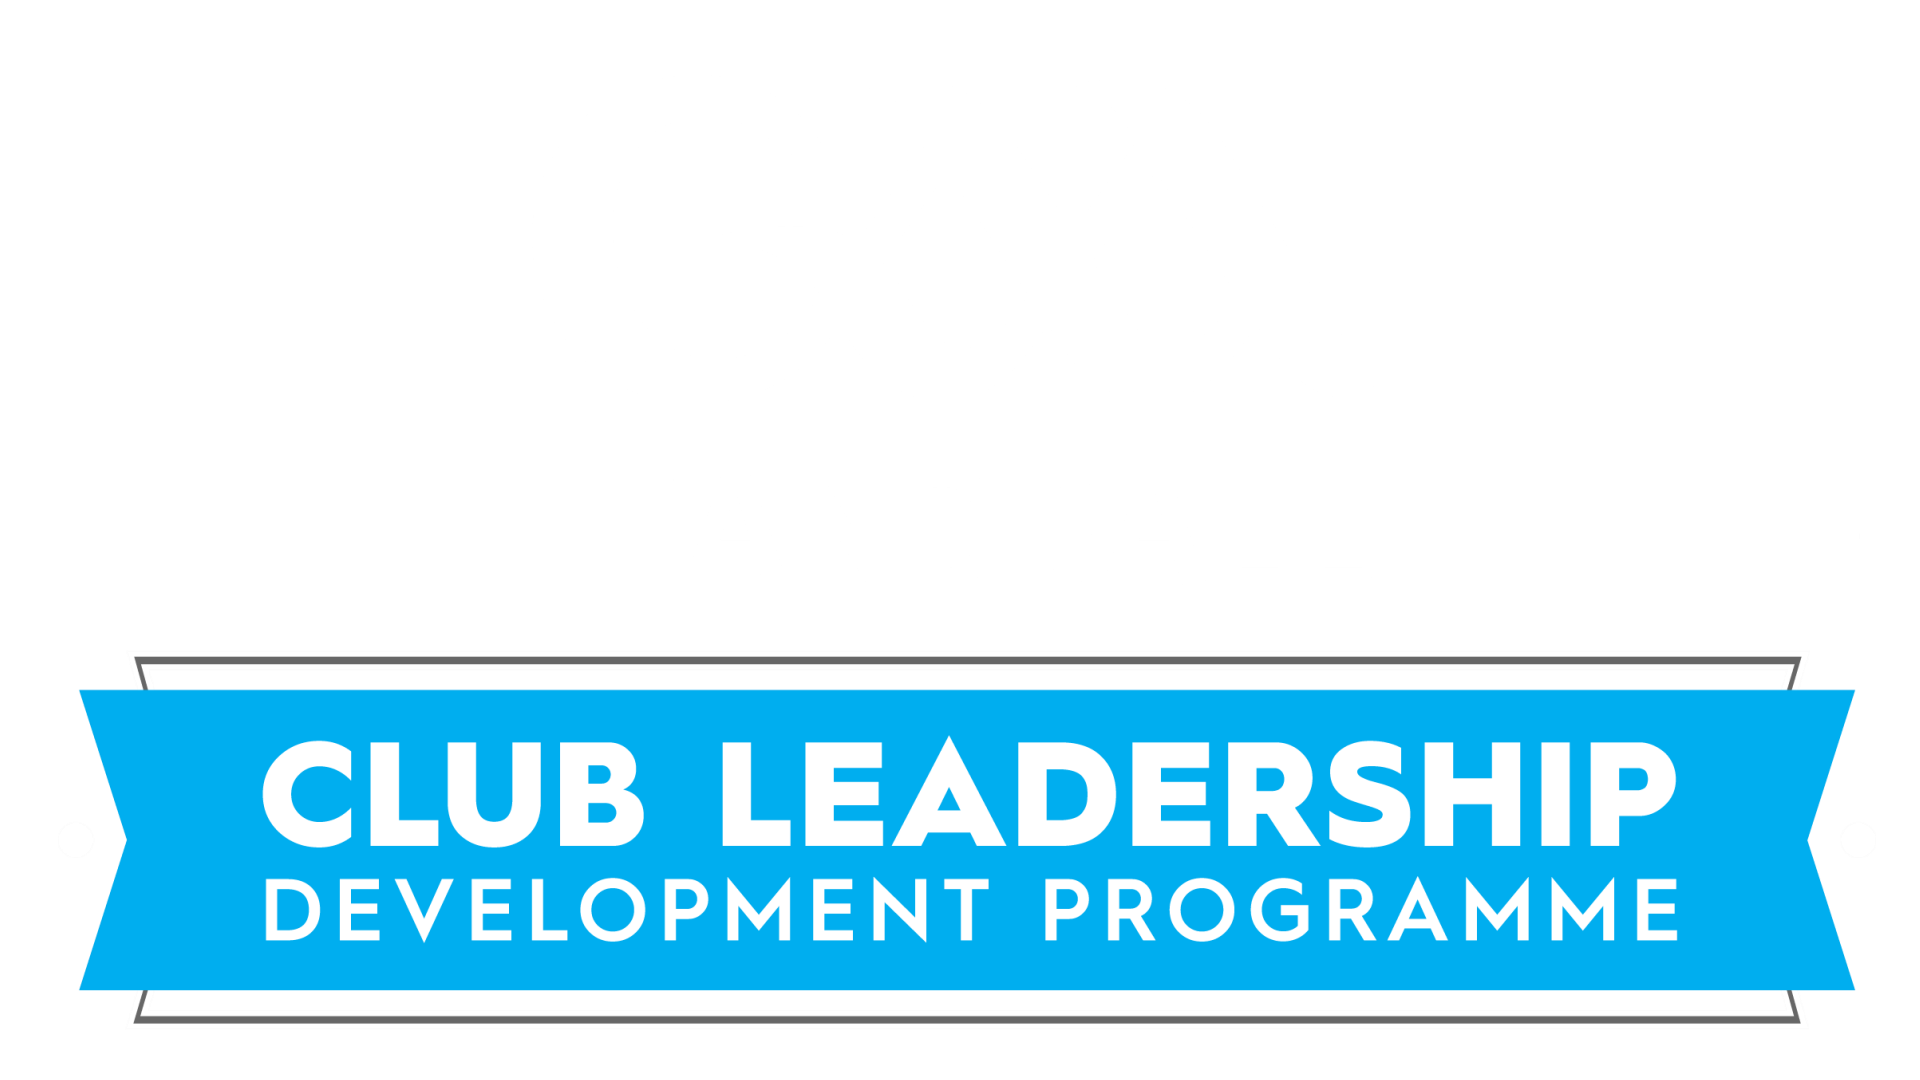 GAA Club Leadership Development Programme - Connacht Handball